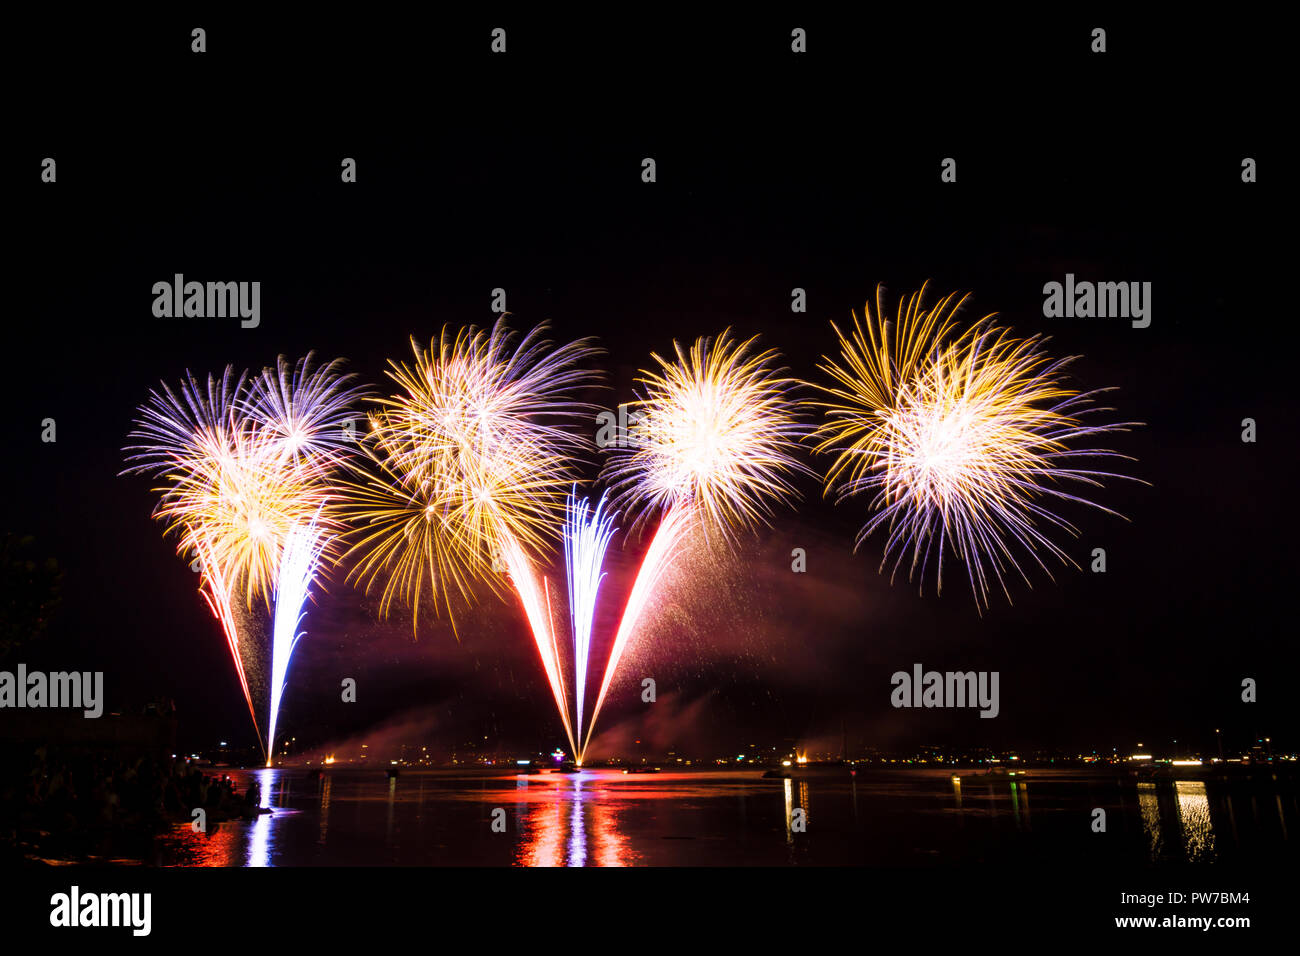 Giant firework fireballs over water surface Stock Photo